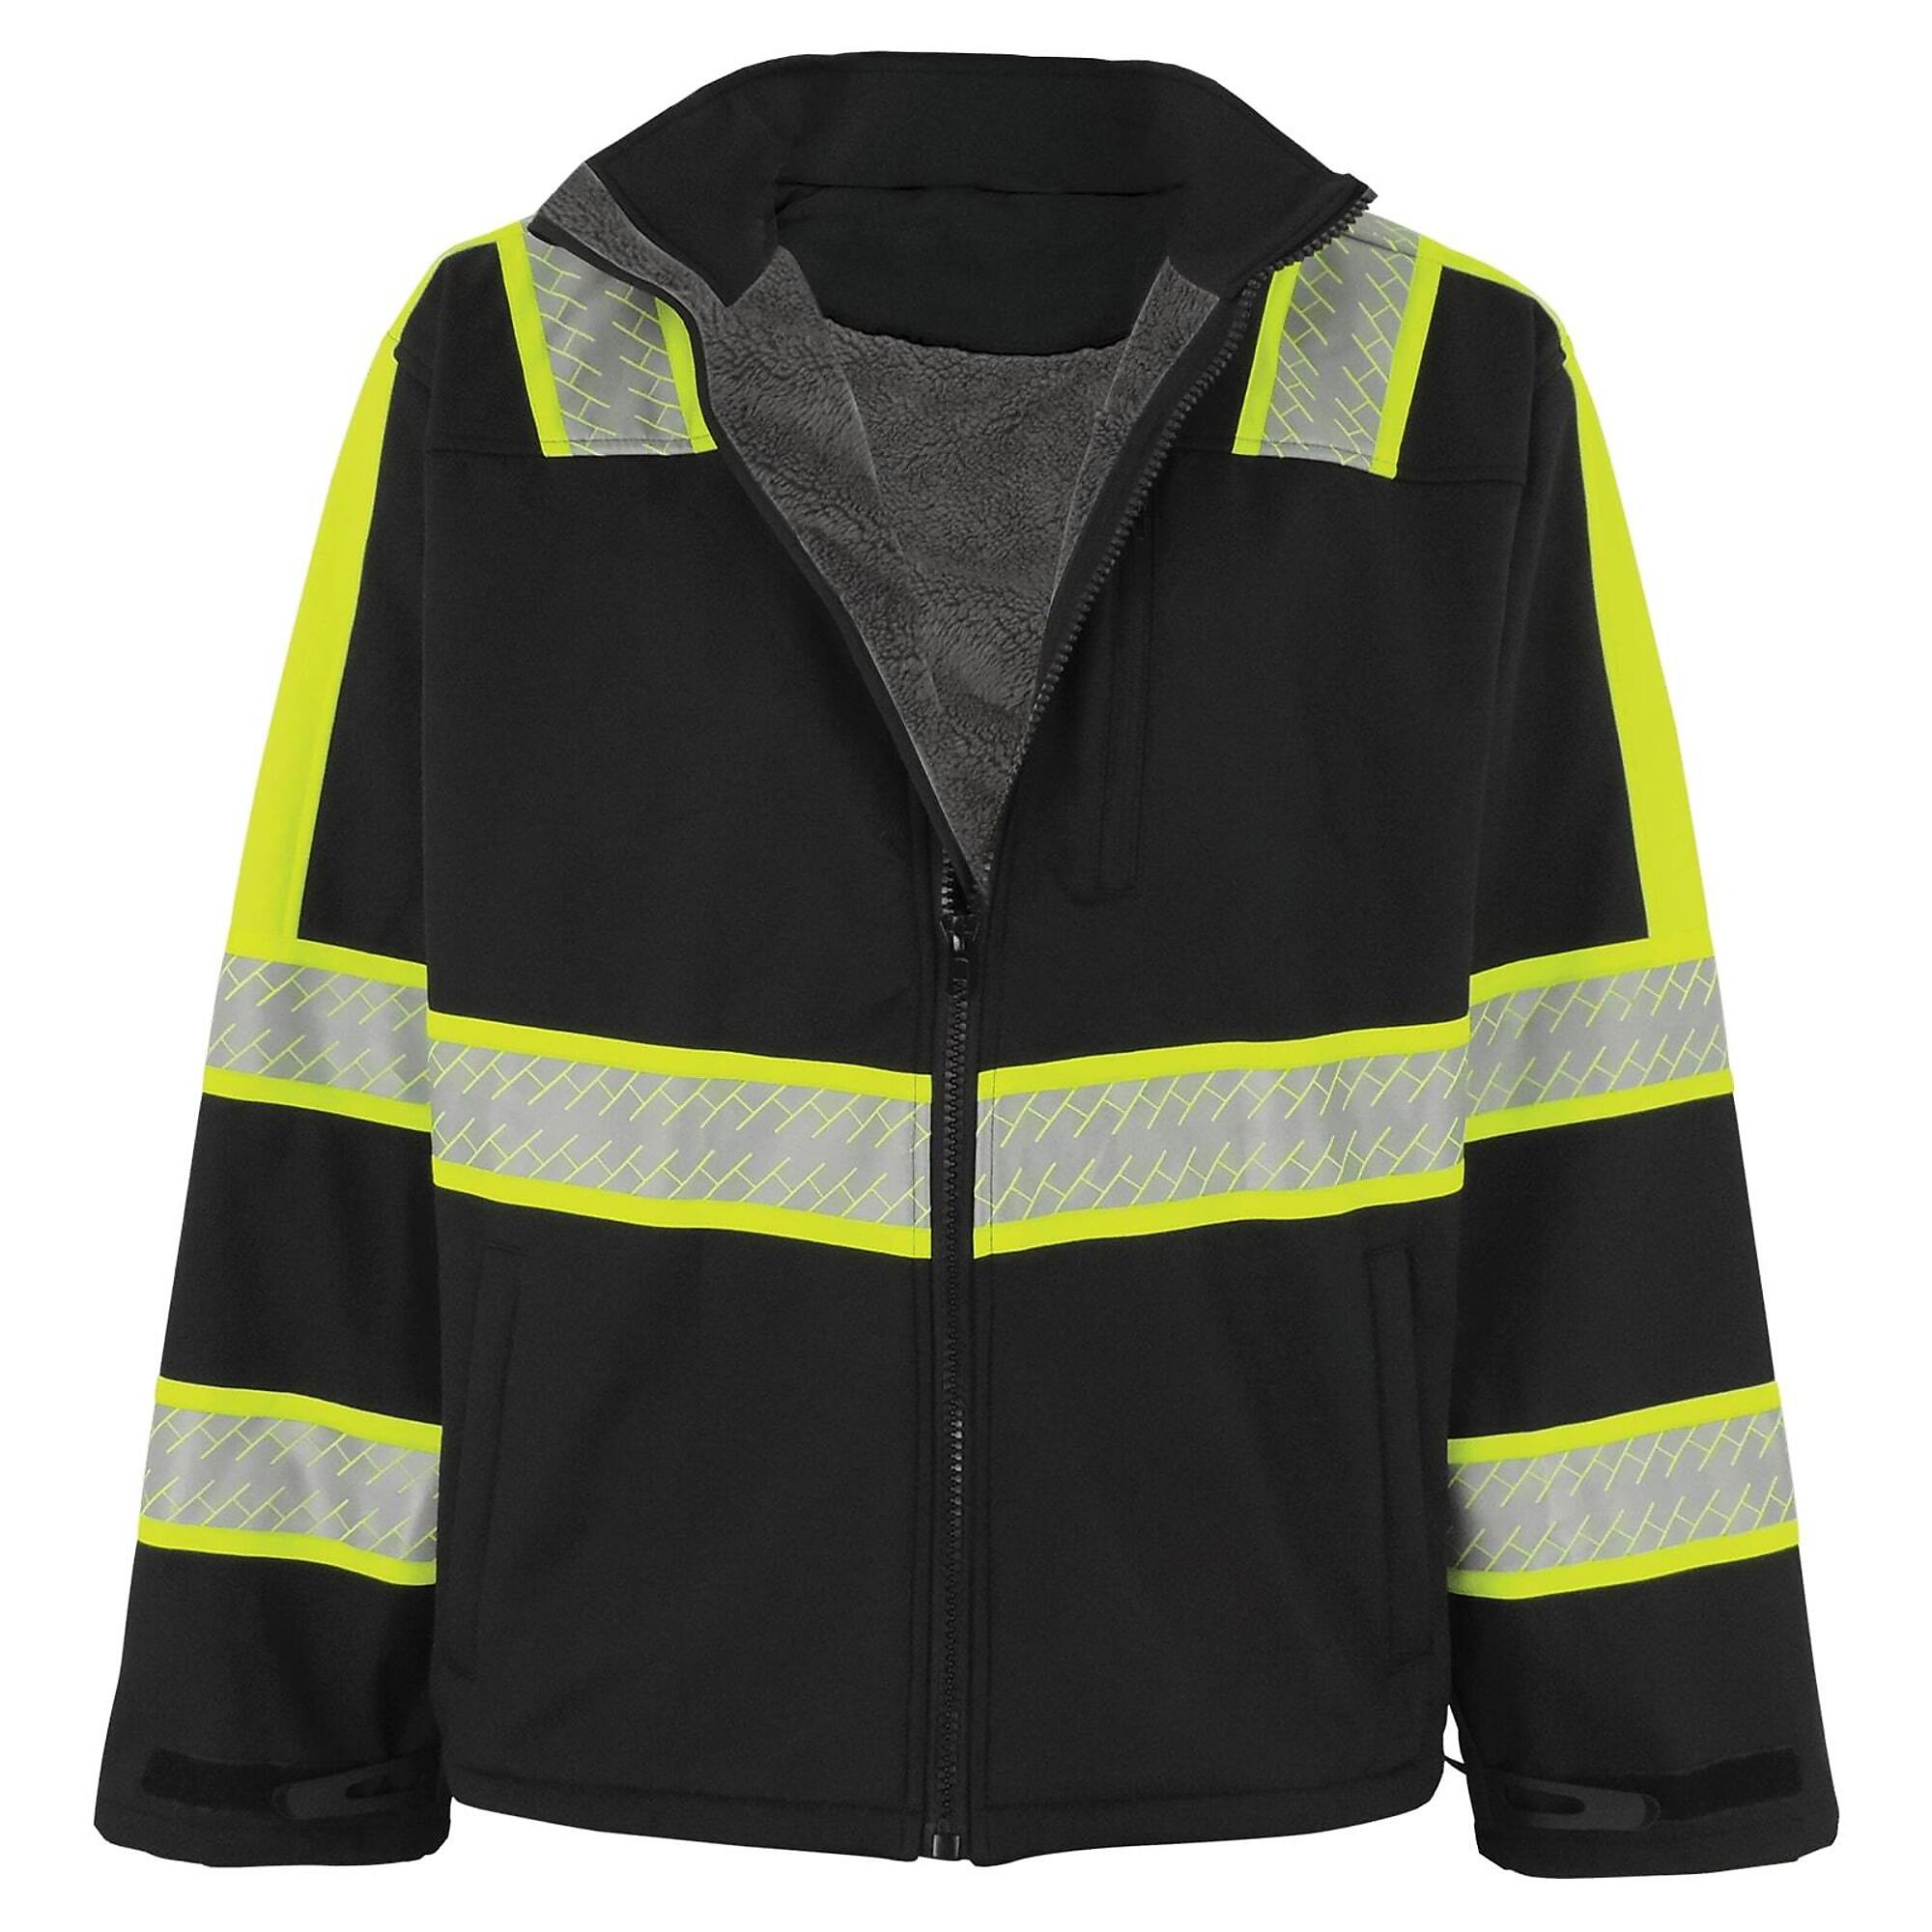 FrogWear, Prem Enhanced Visibility Black Sherpa-Lined Jacket, Size XL, Color Black with Silver Reflective, Model EV-SJ1-XL